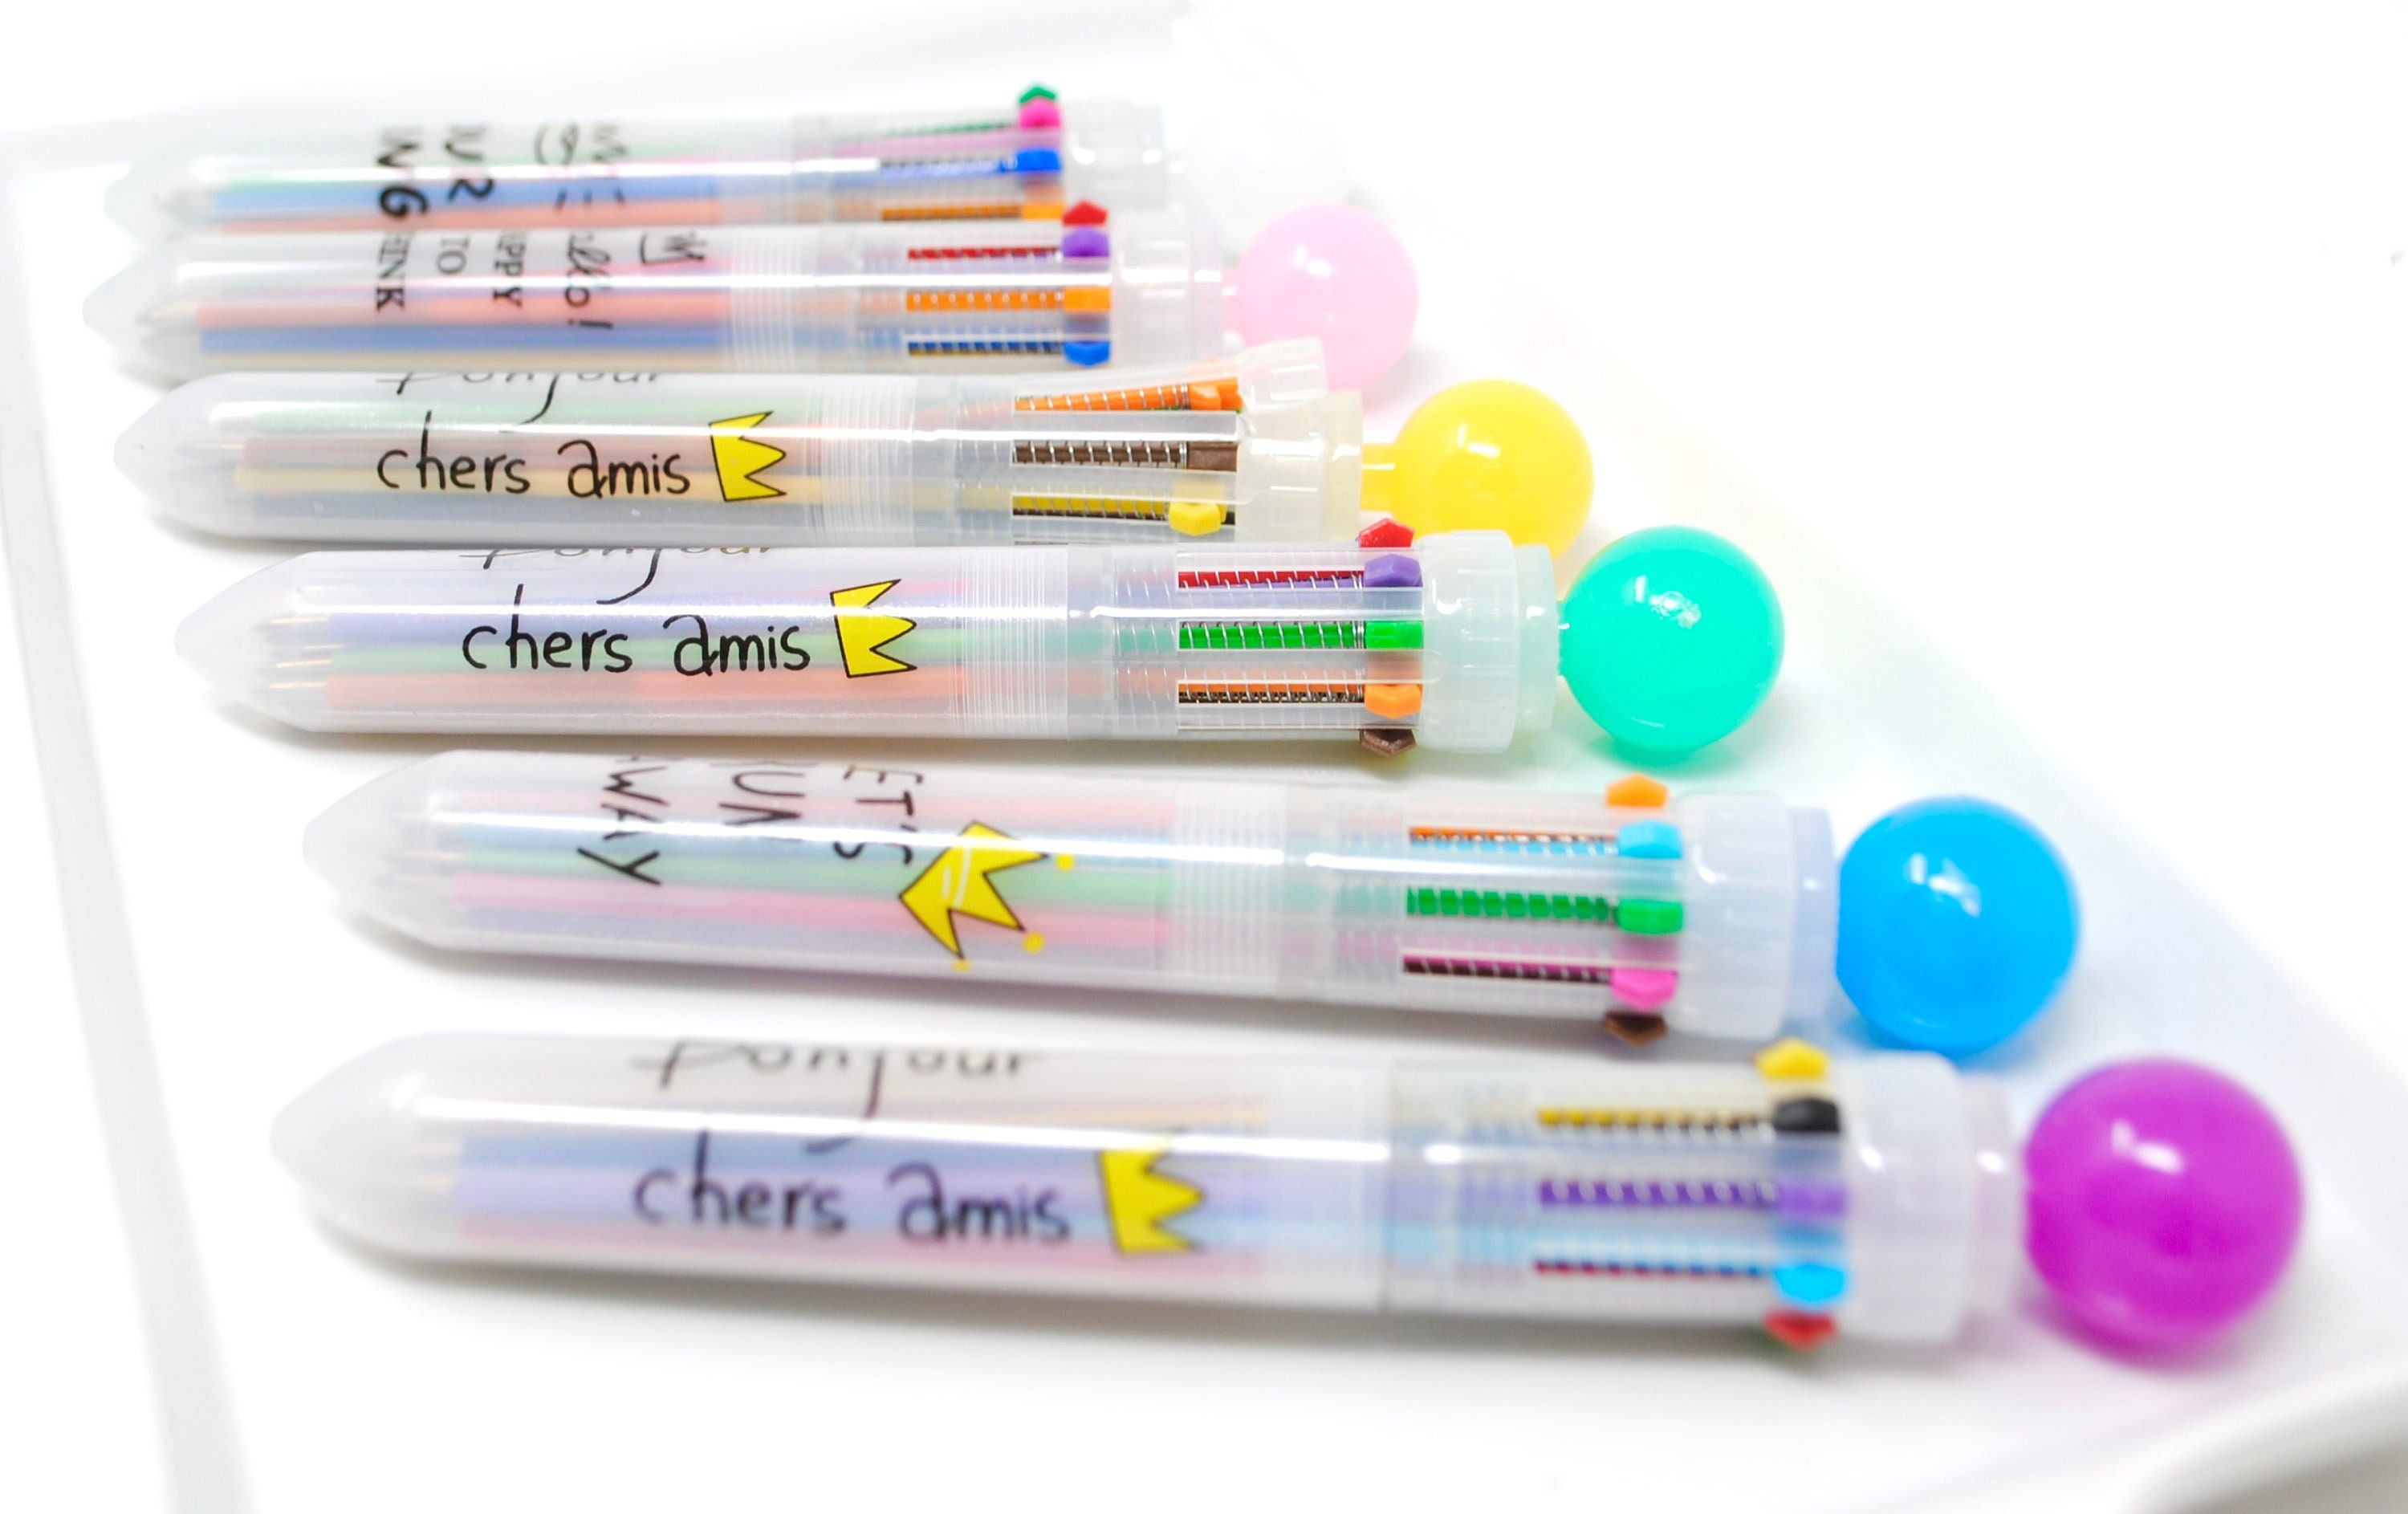 KTD Rainbow Pens with Stylus